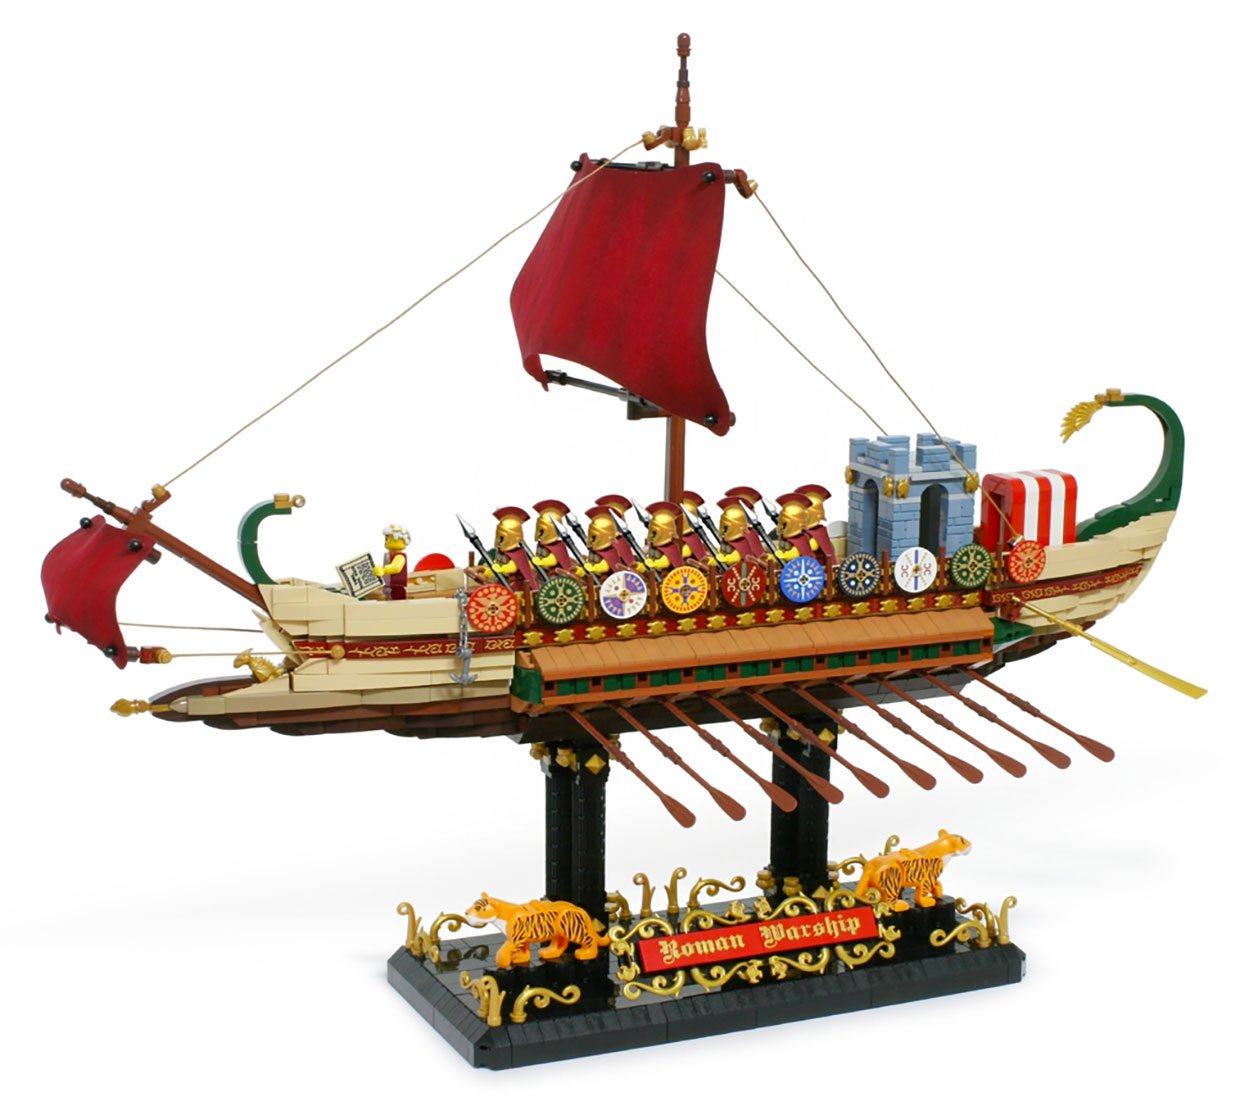 LEGO Ideas Roman Warship